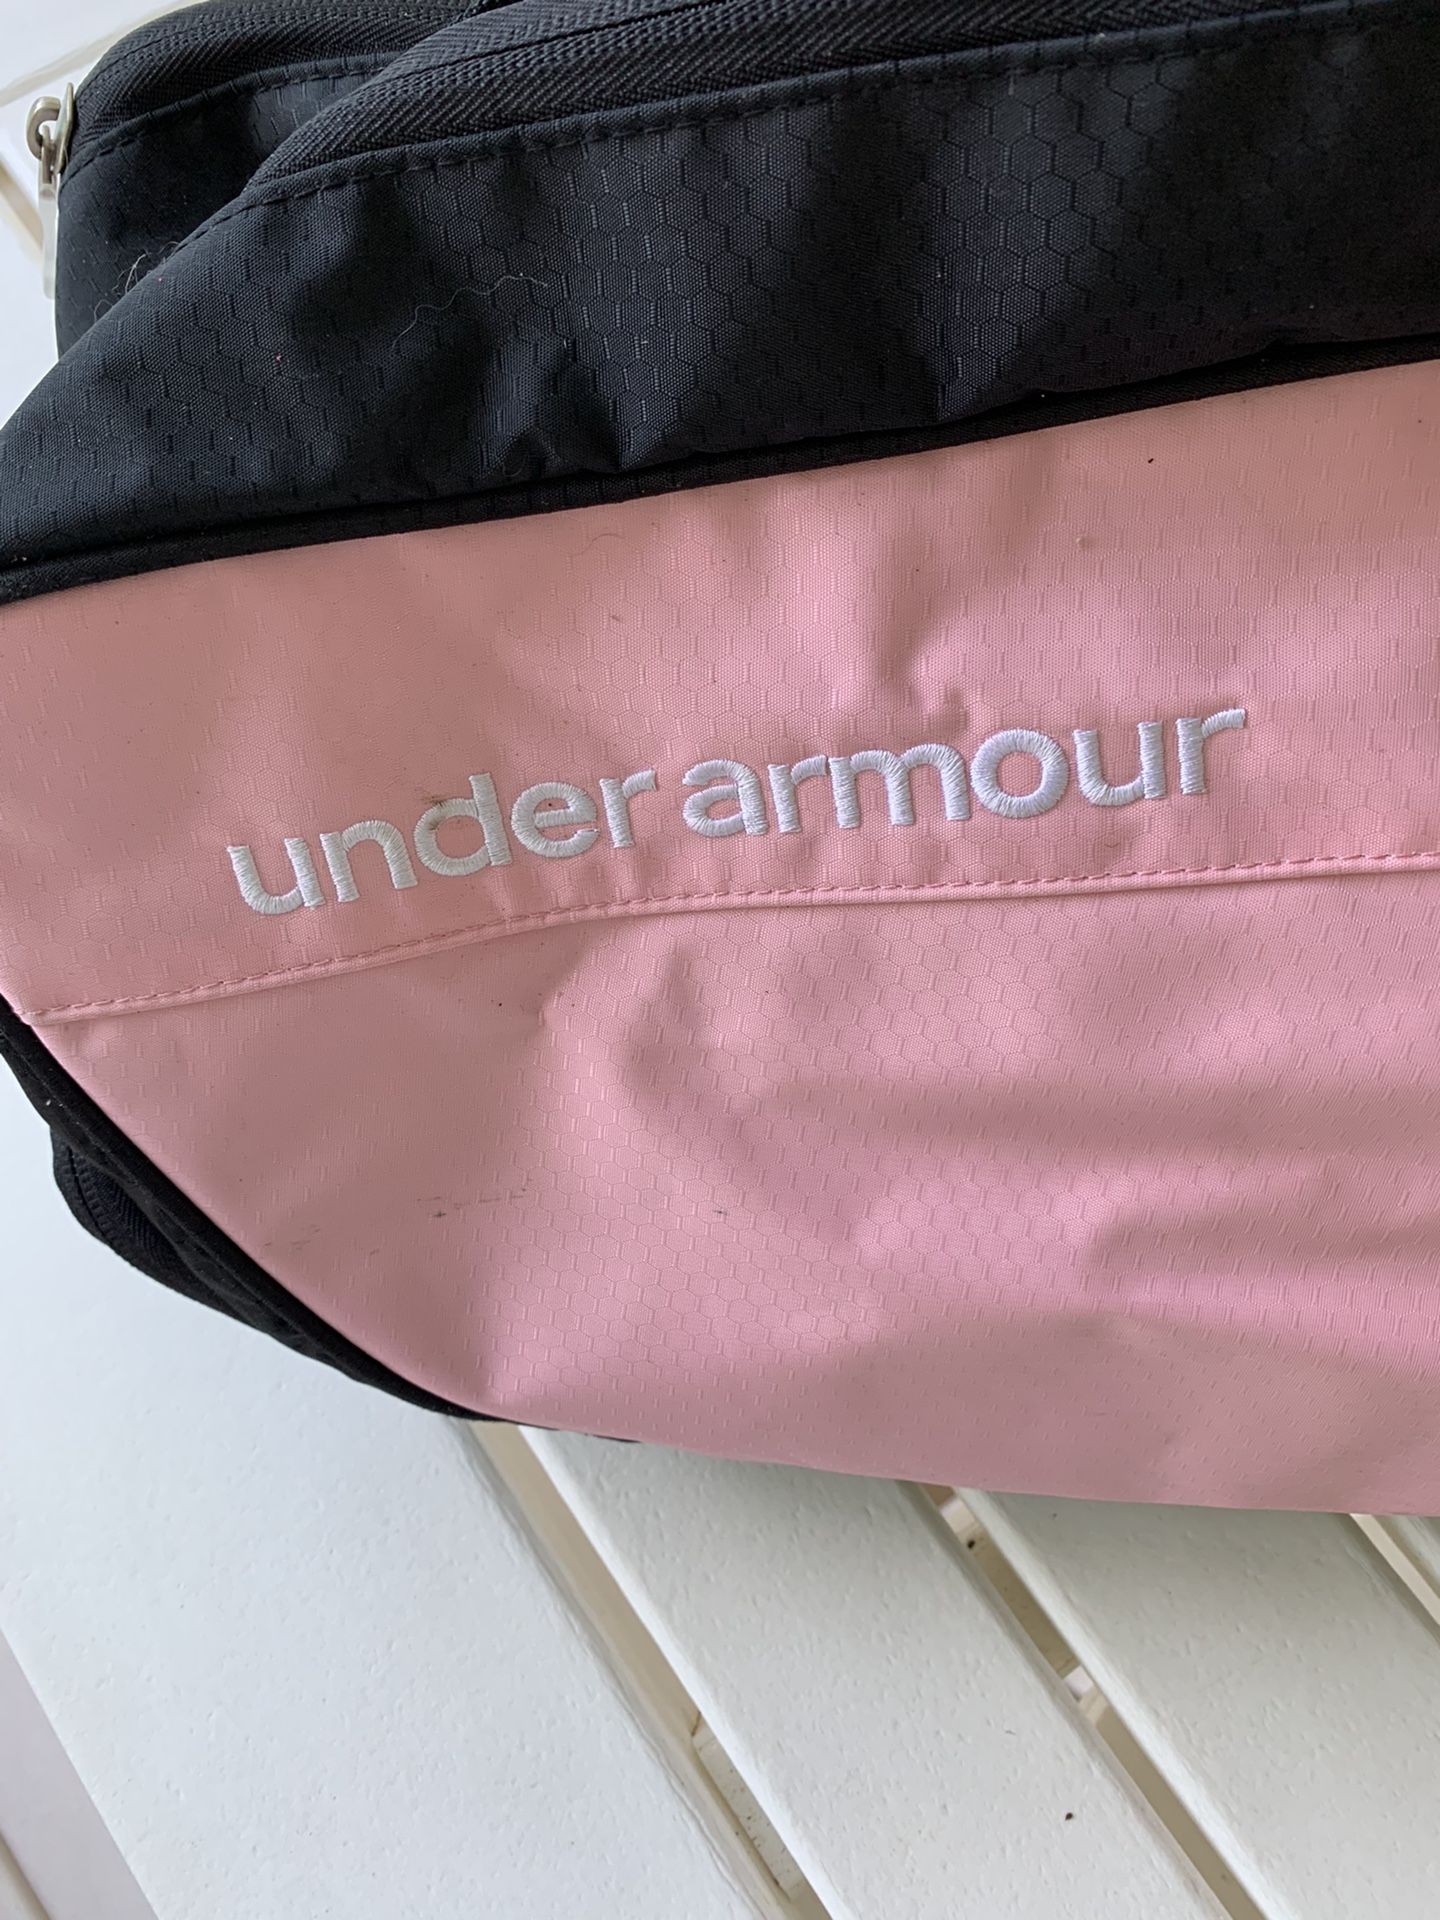 Tennis Racket Pro Bag Under Armor